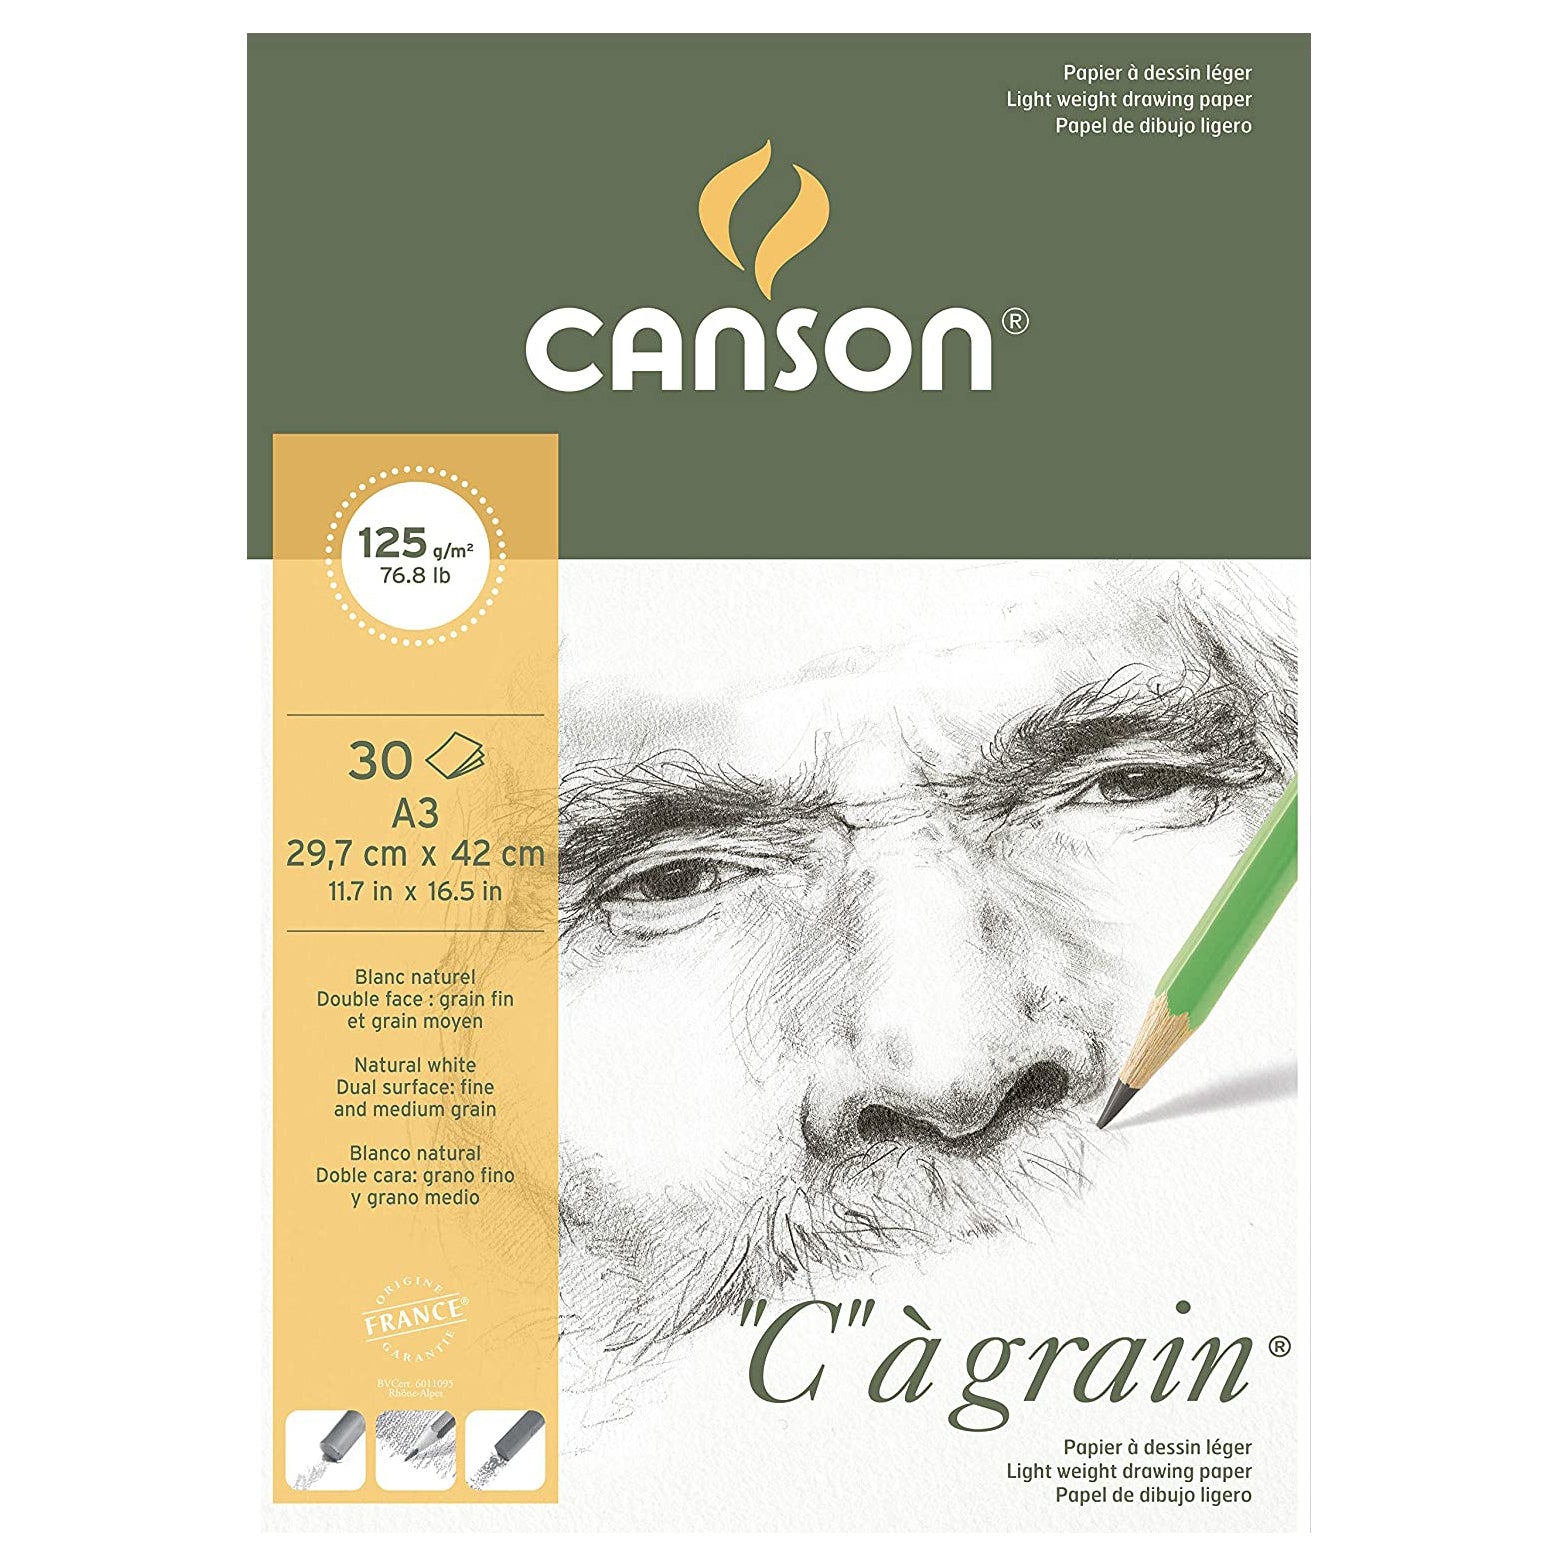 Canson : "C" á grain Pad